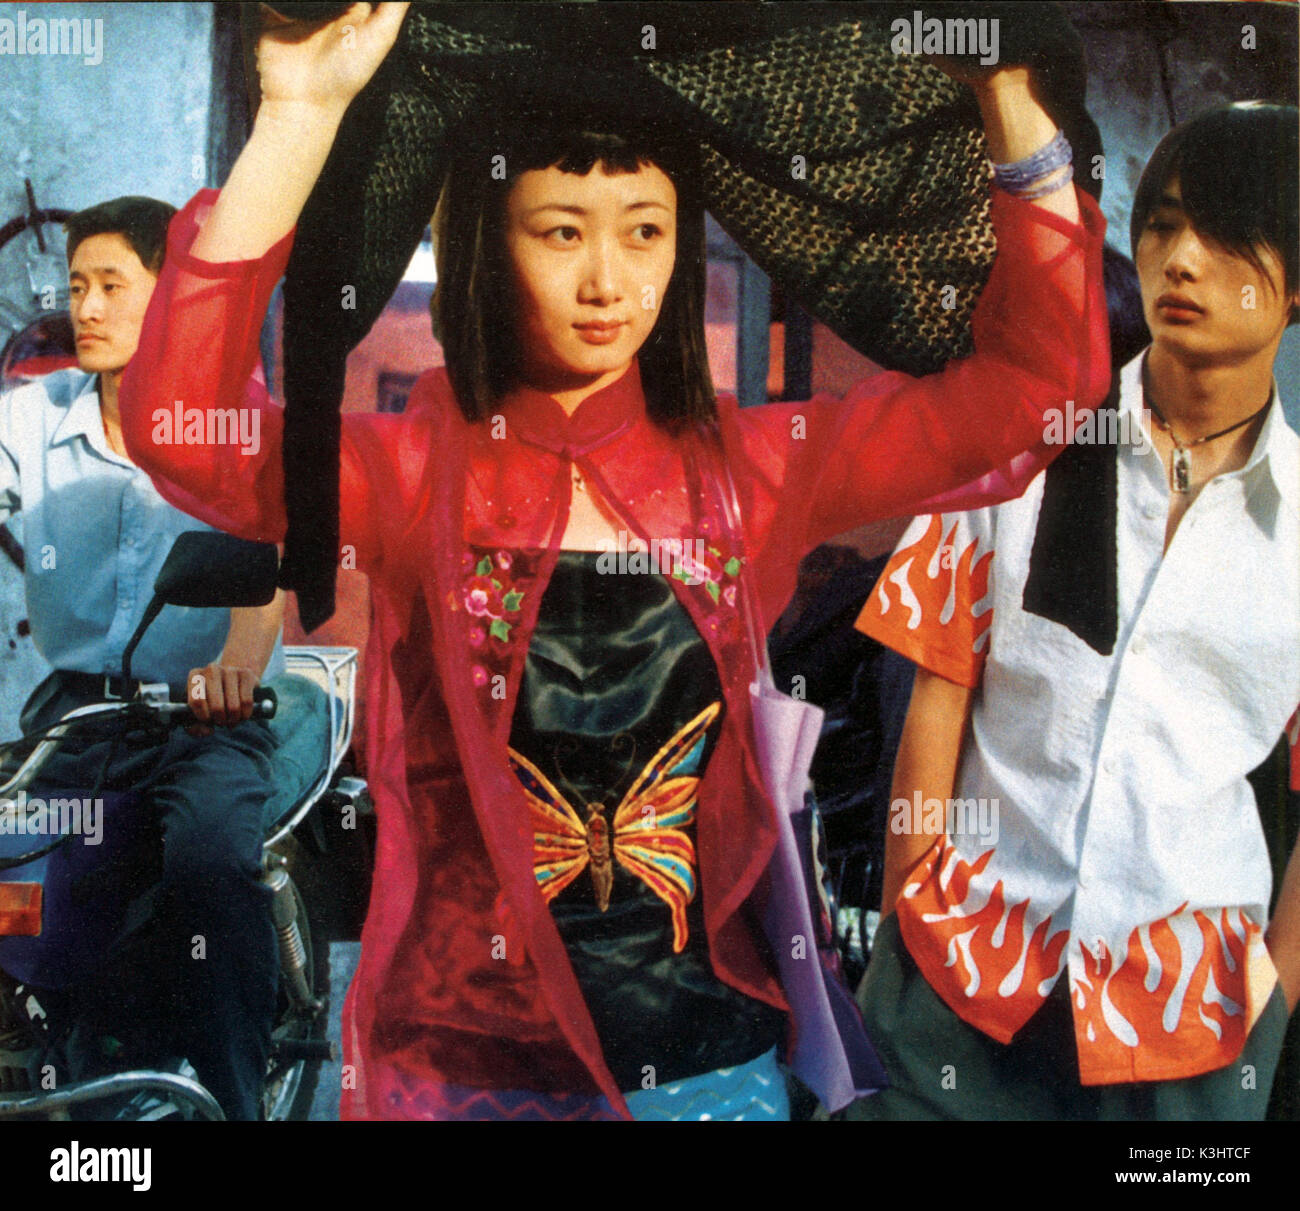 UNKNOWN PLEASURES aka REN XIAO YAO     Date: 2002 Stock Photo